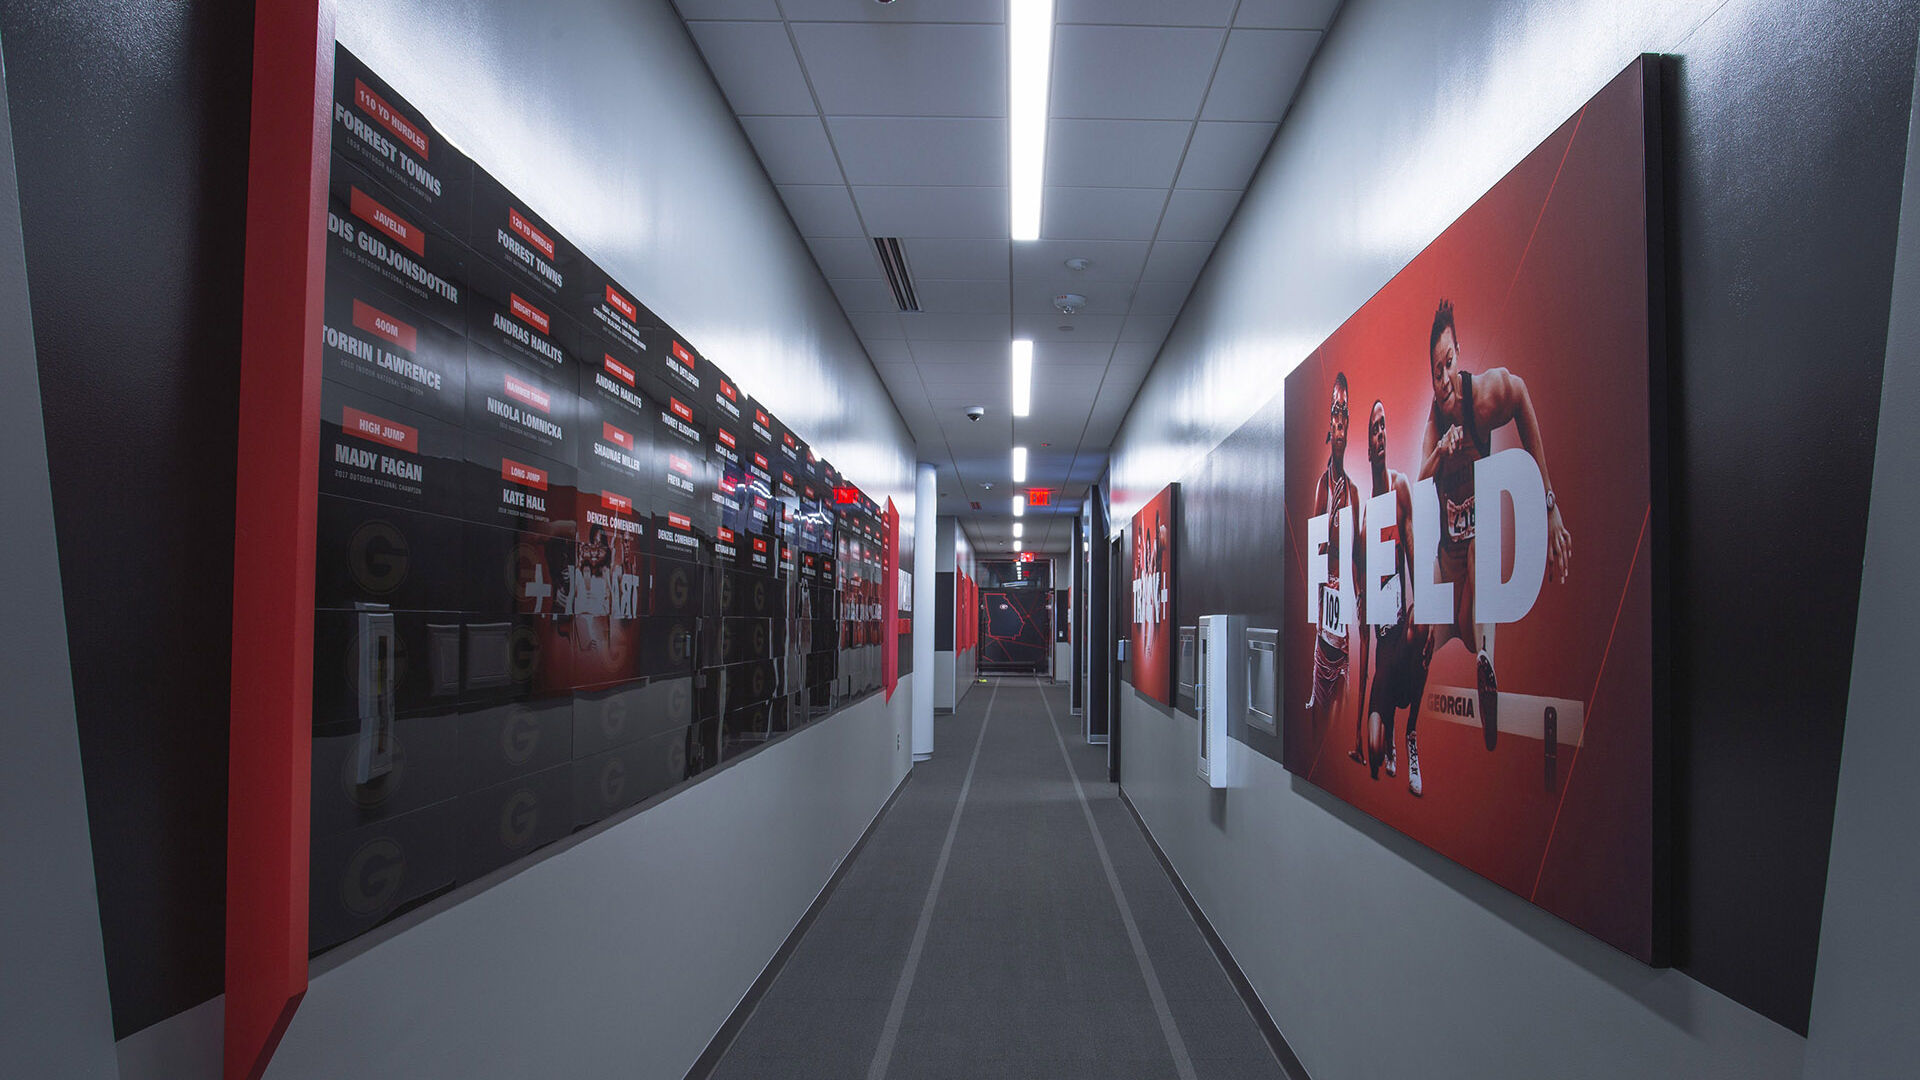 University of Georgia Track and Field Hallway Accolade Displays